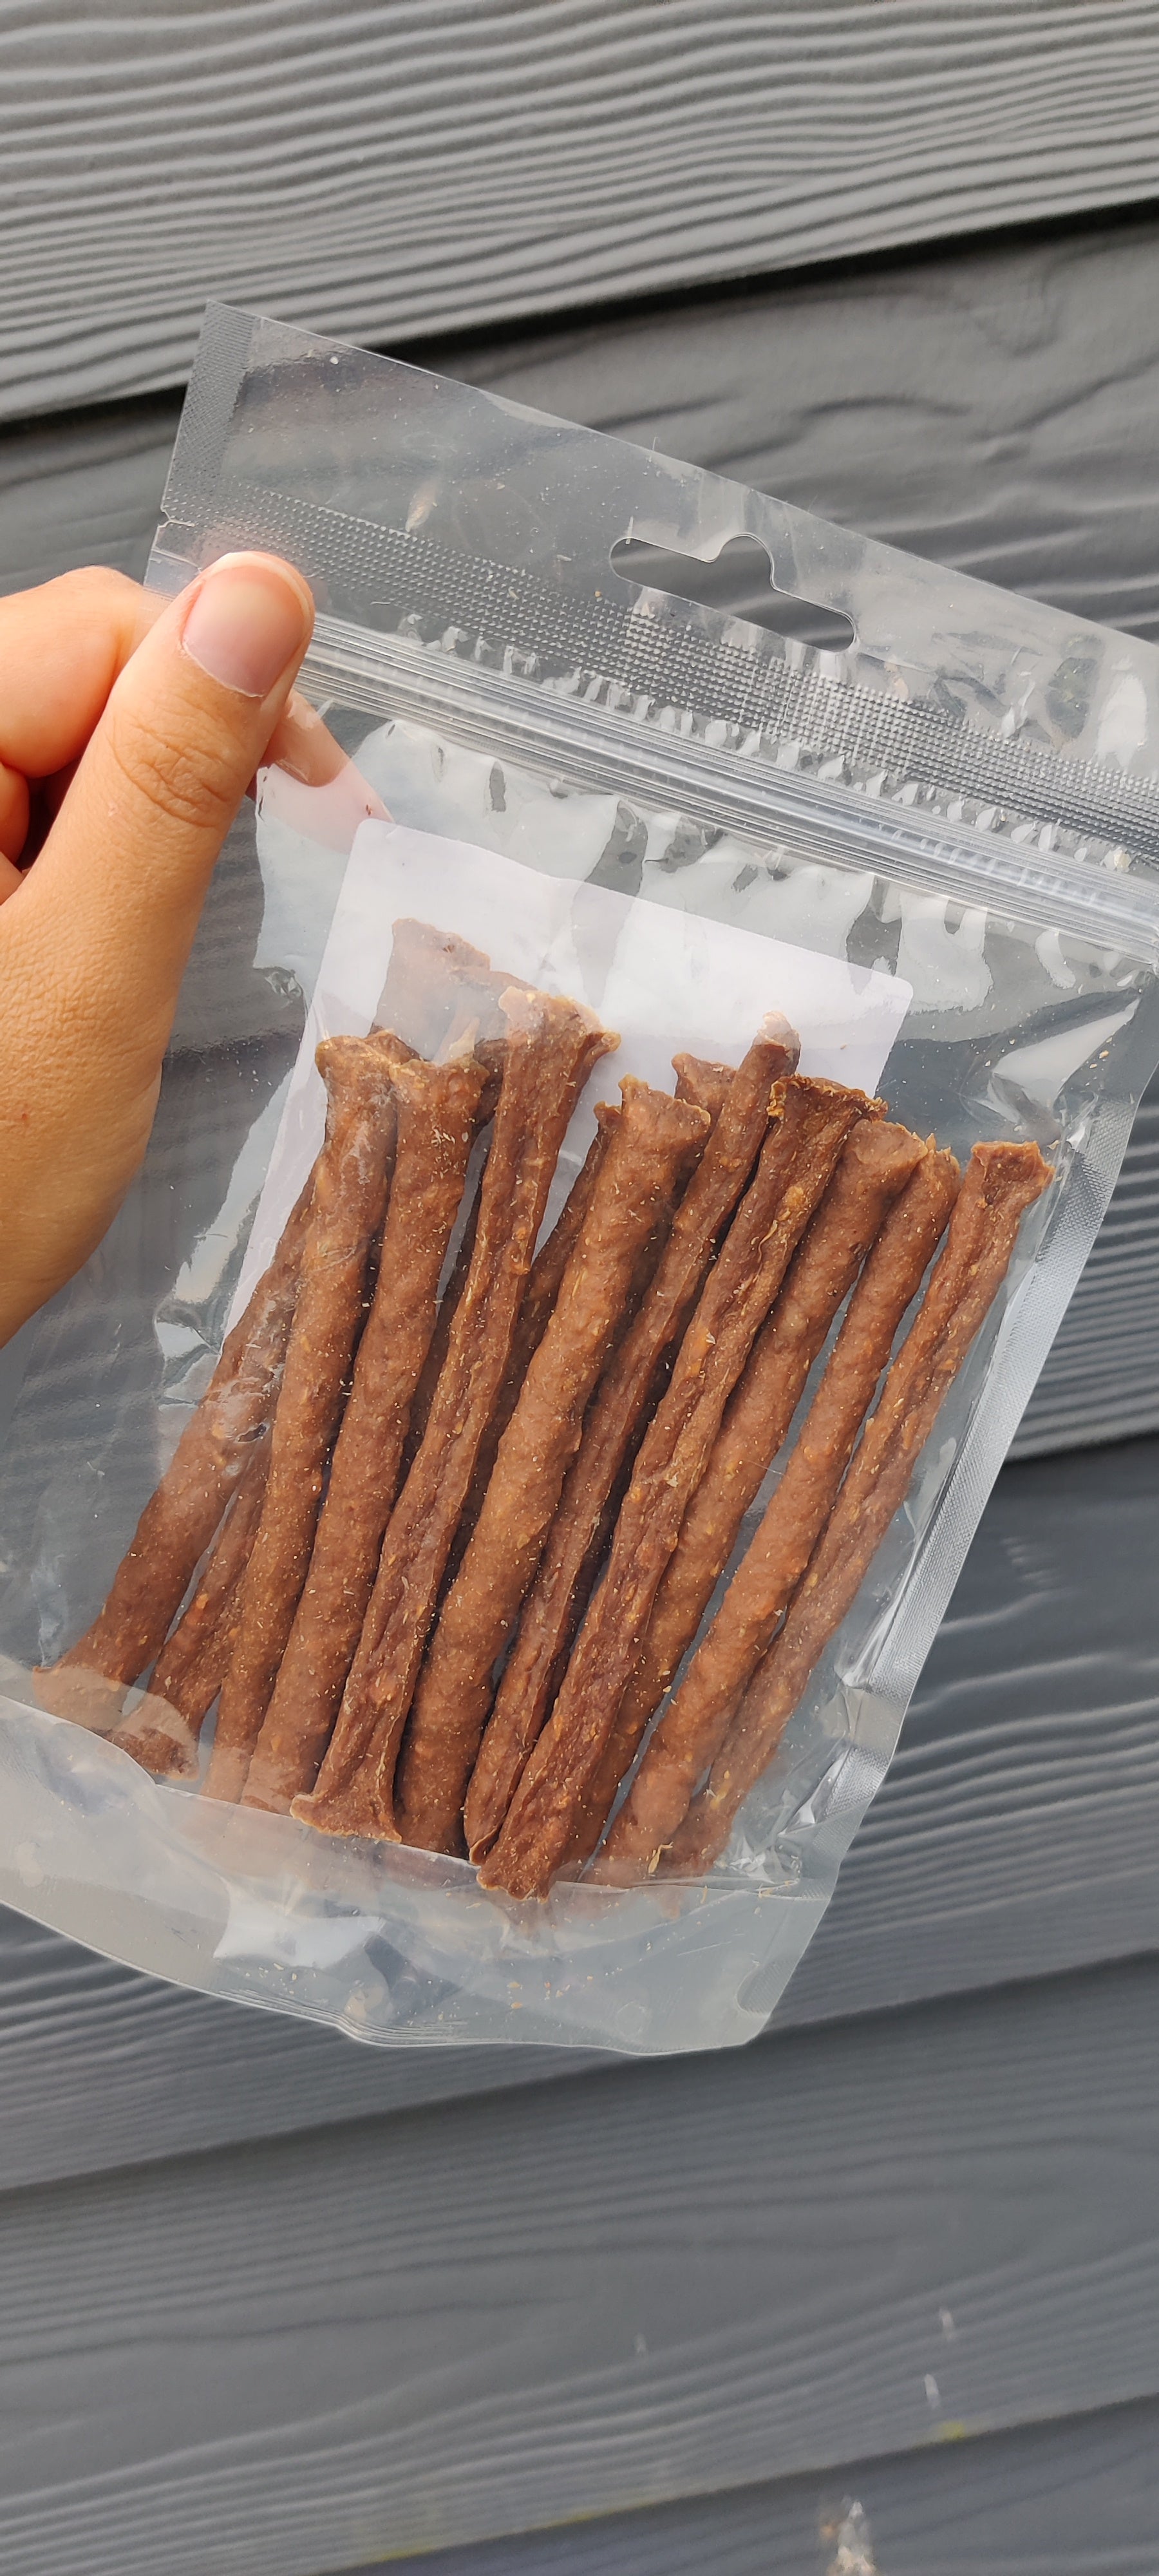 Akyra - Sticks | Natuurlijke hypoallergene kauw snack hond/kat